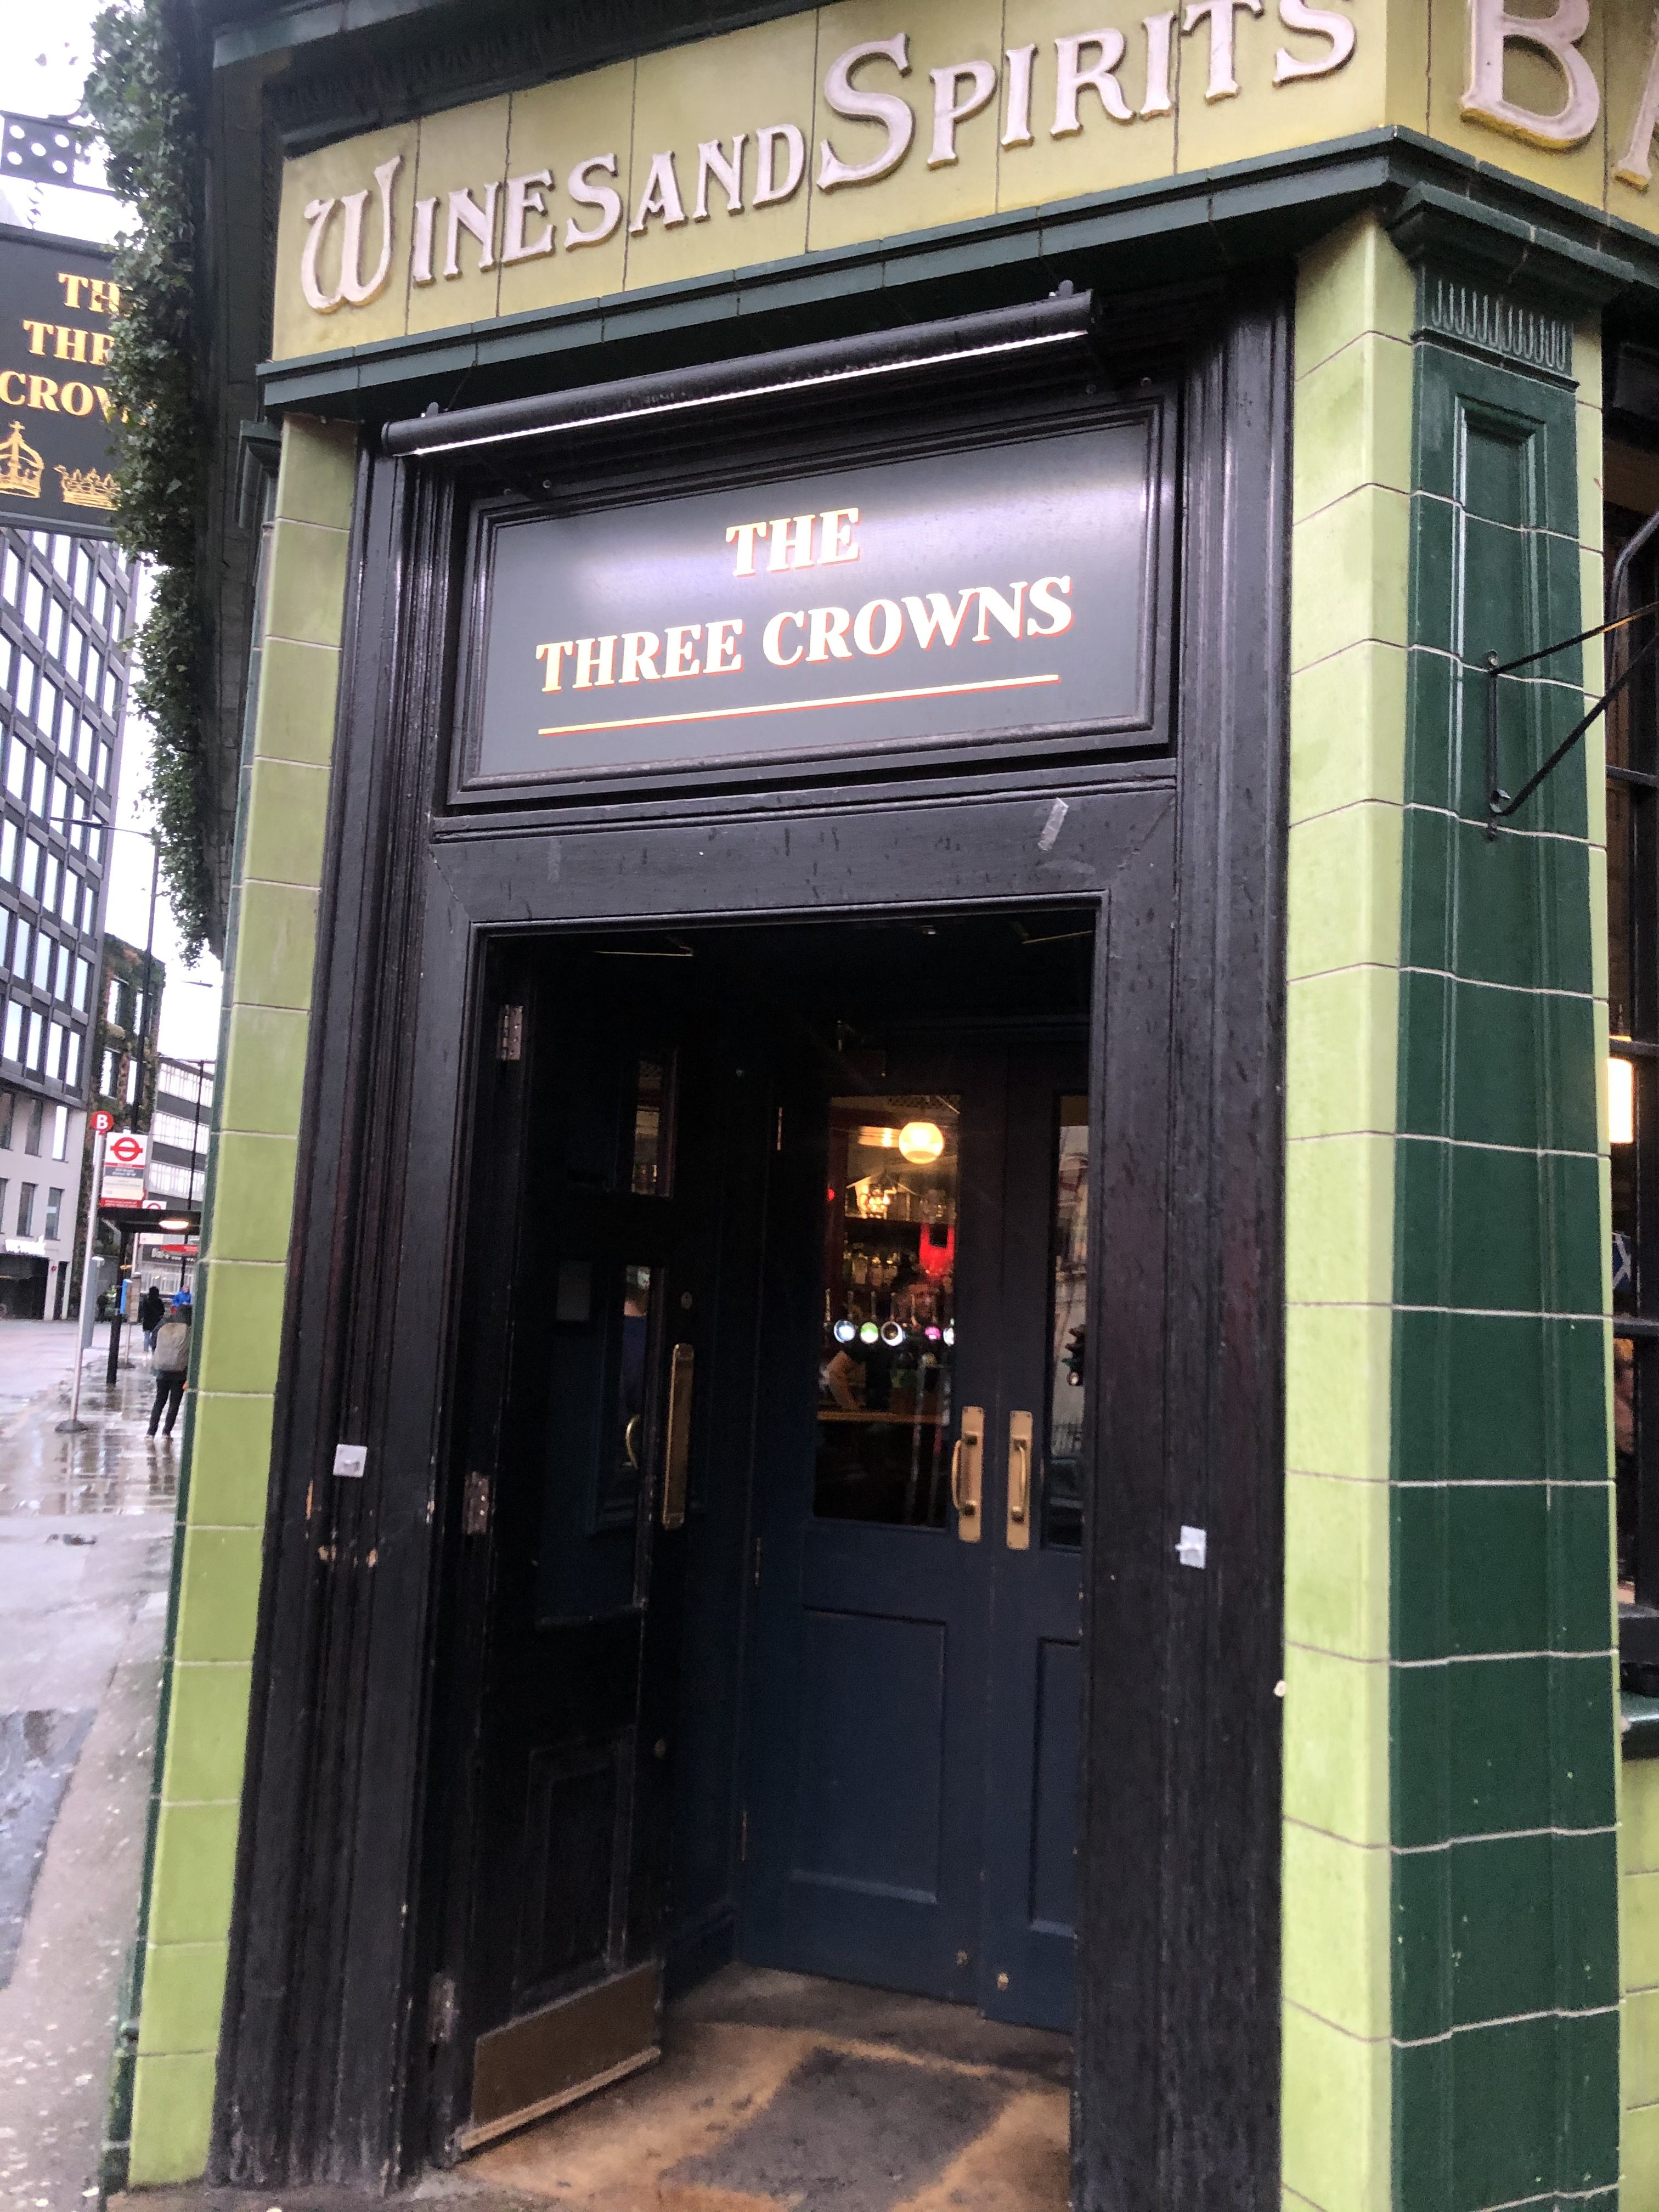 The three Crowns pub